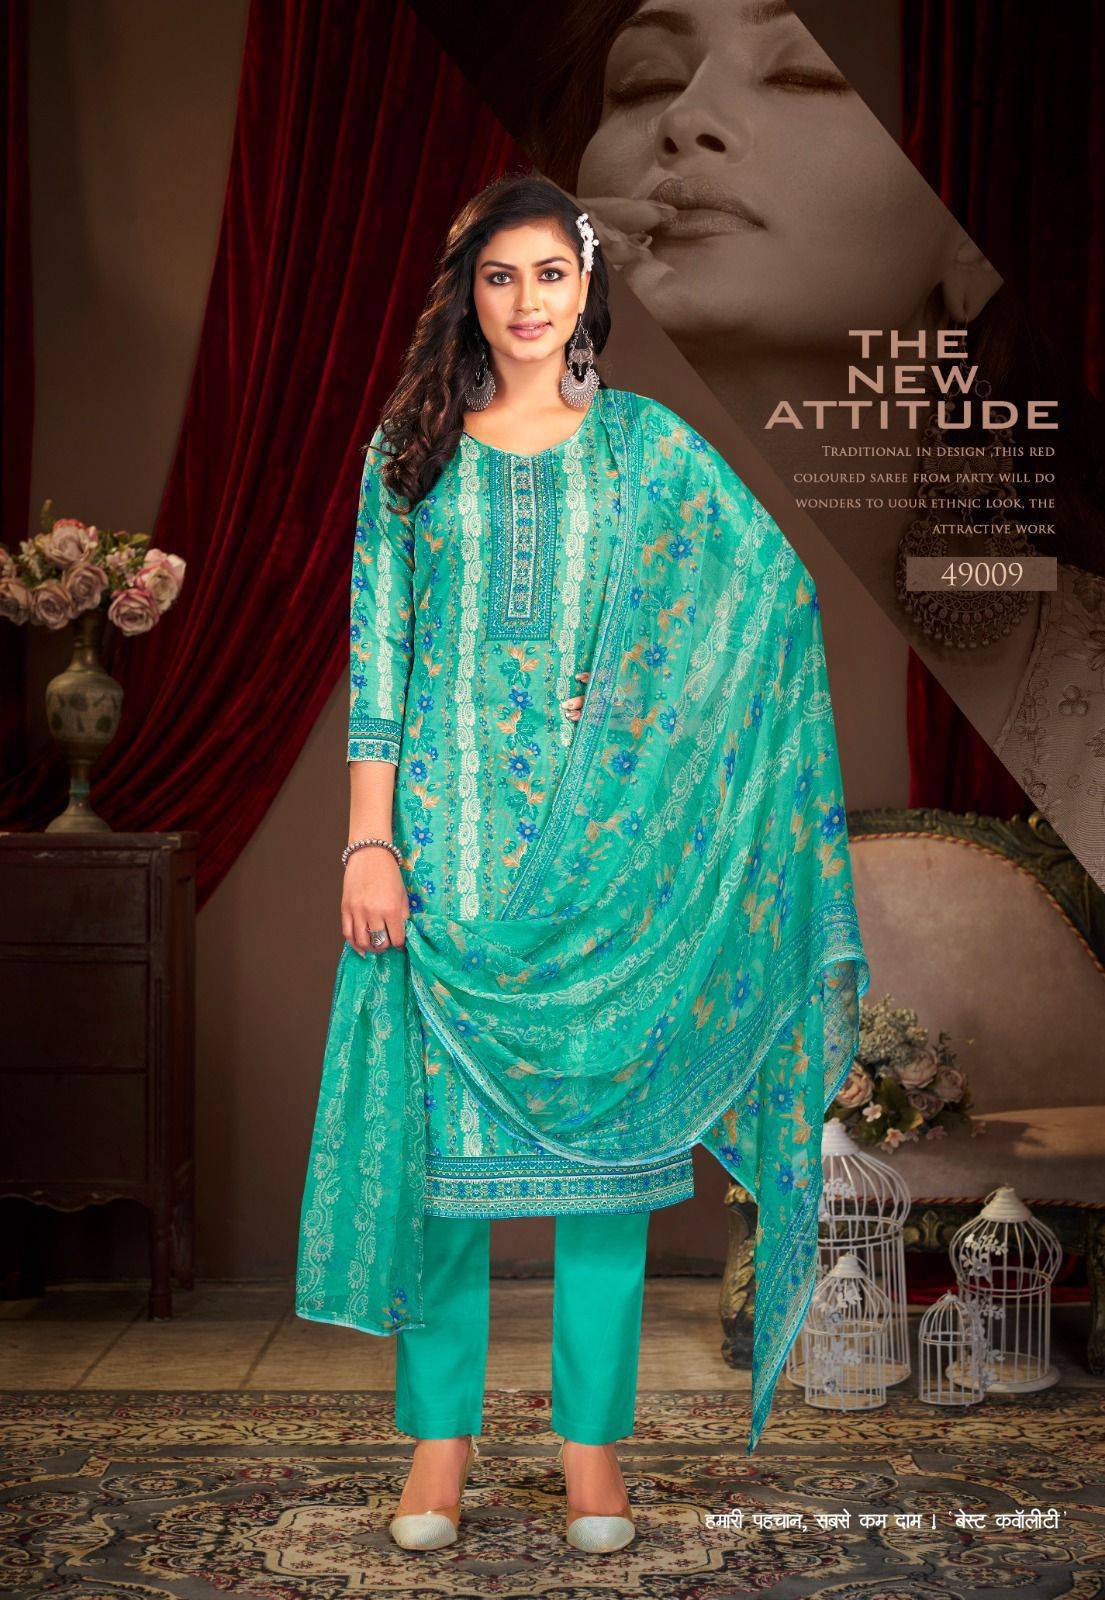 Punjabi Kudi Vol-49 By Shiv Gori Silk Mills 49001 To 49012 Series Beautiful Festive Suits Colorful Stylish Fancy Casual Wear & Ethnic Wear Pure Cotton Print Dresses At Wholesale Price